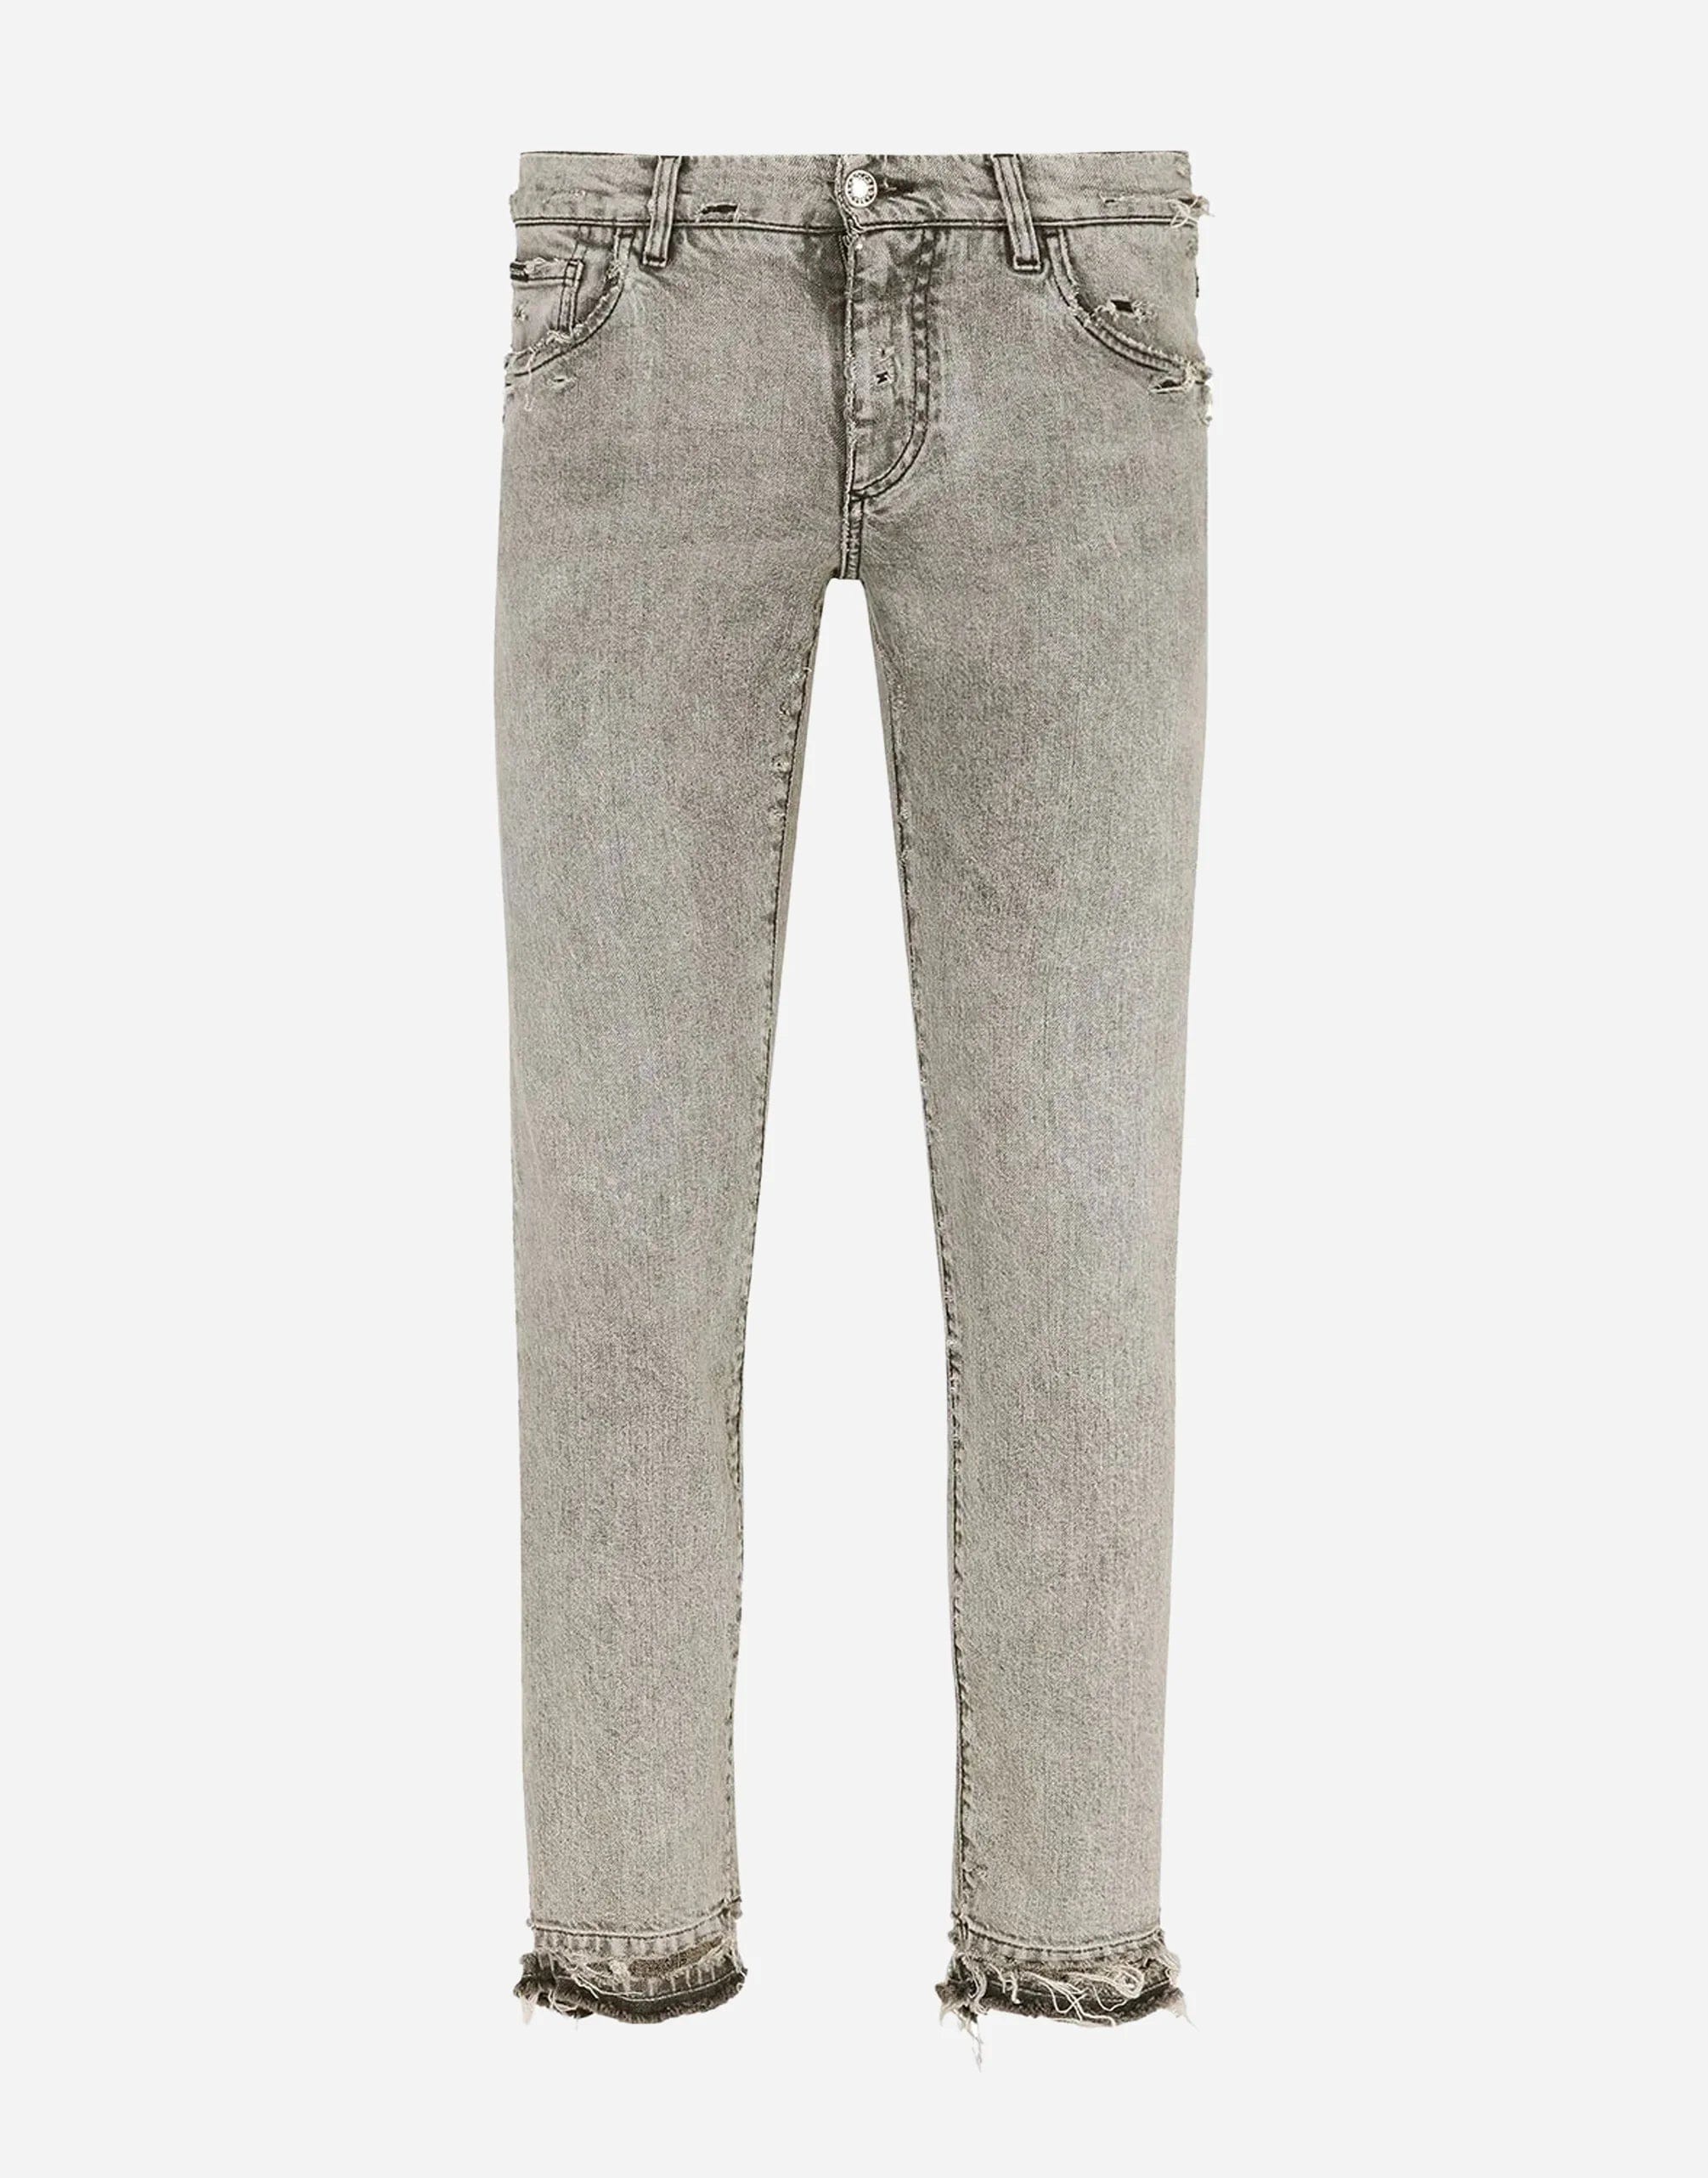 Jeans ajustados